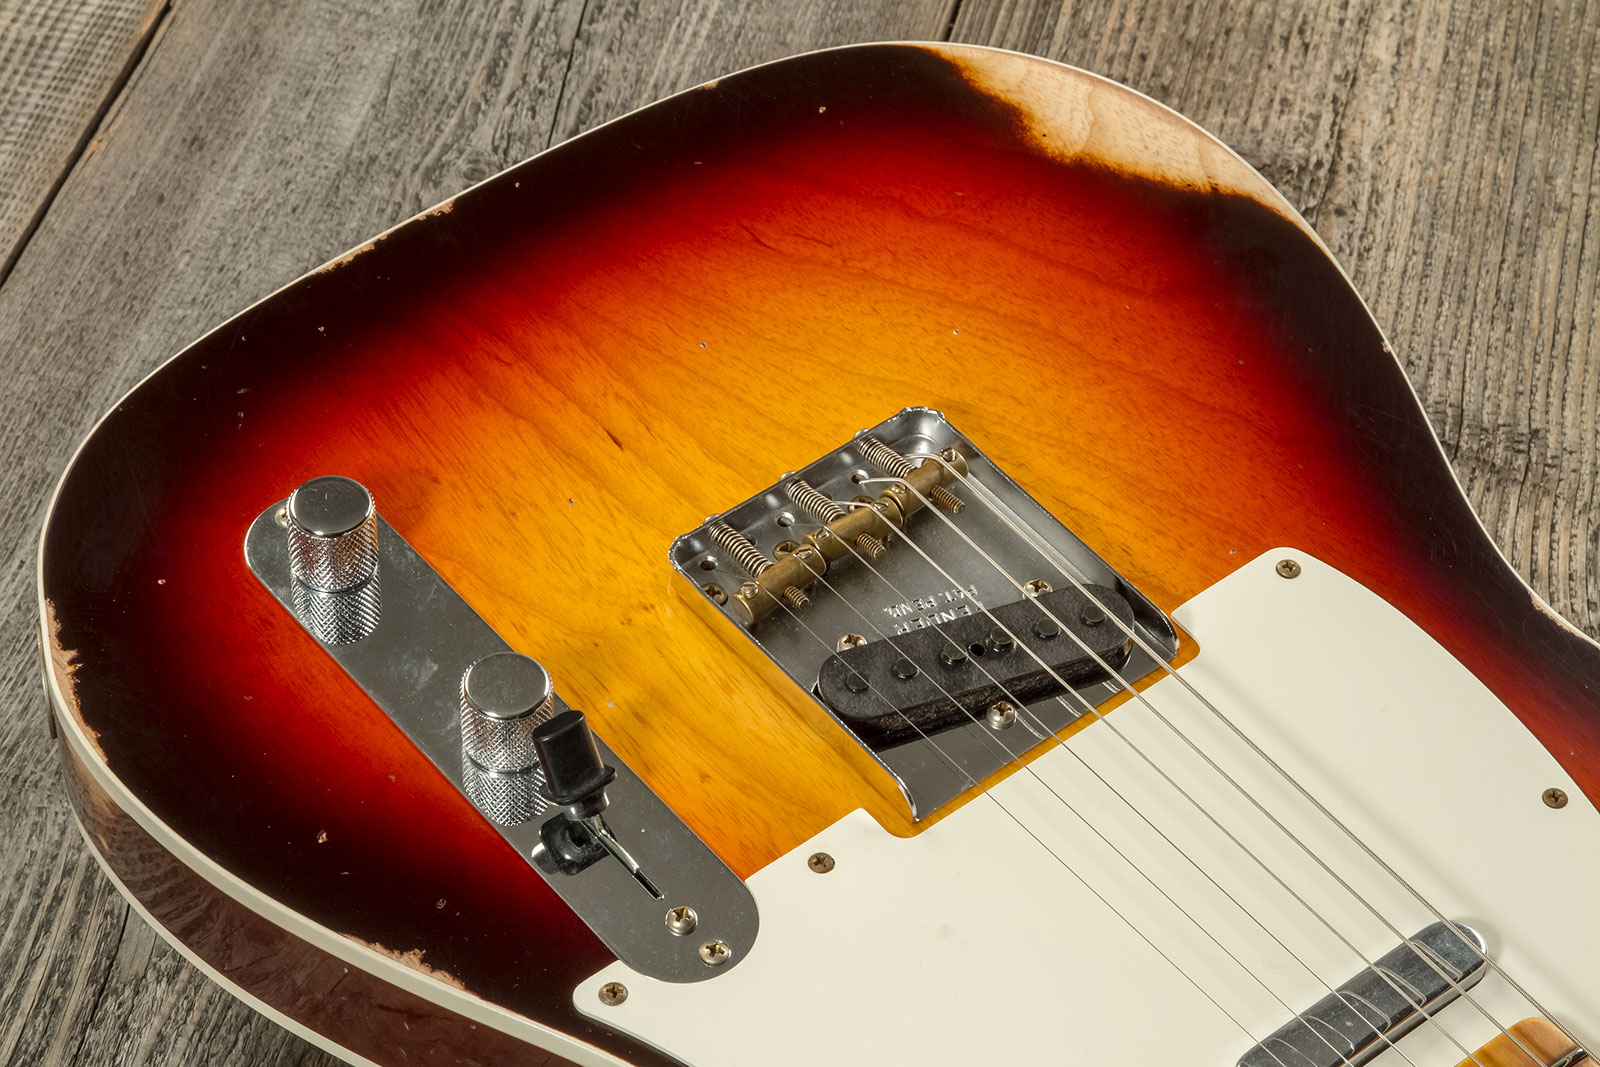 Fender Custom Shop Tele Custom 1959 2s Ht Mn #cz573750 - Relic Chocolate 3-color Sunburst - Tel shape electric guitar - Variation 3